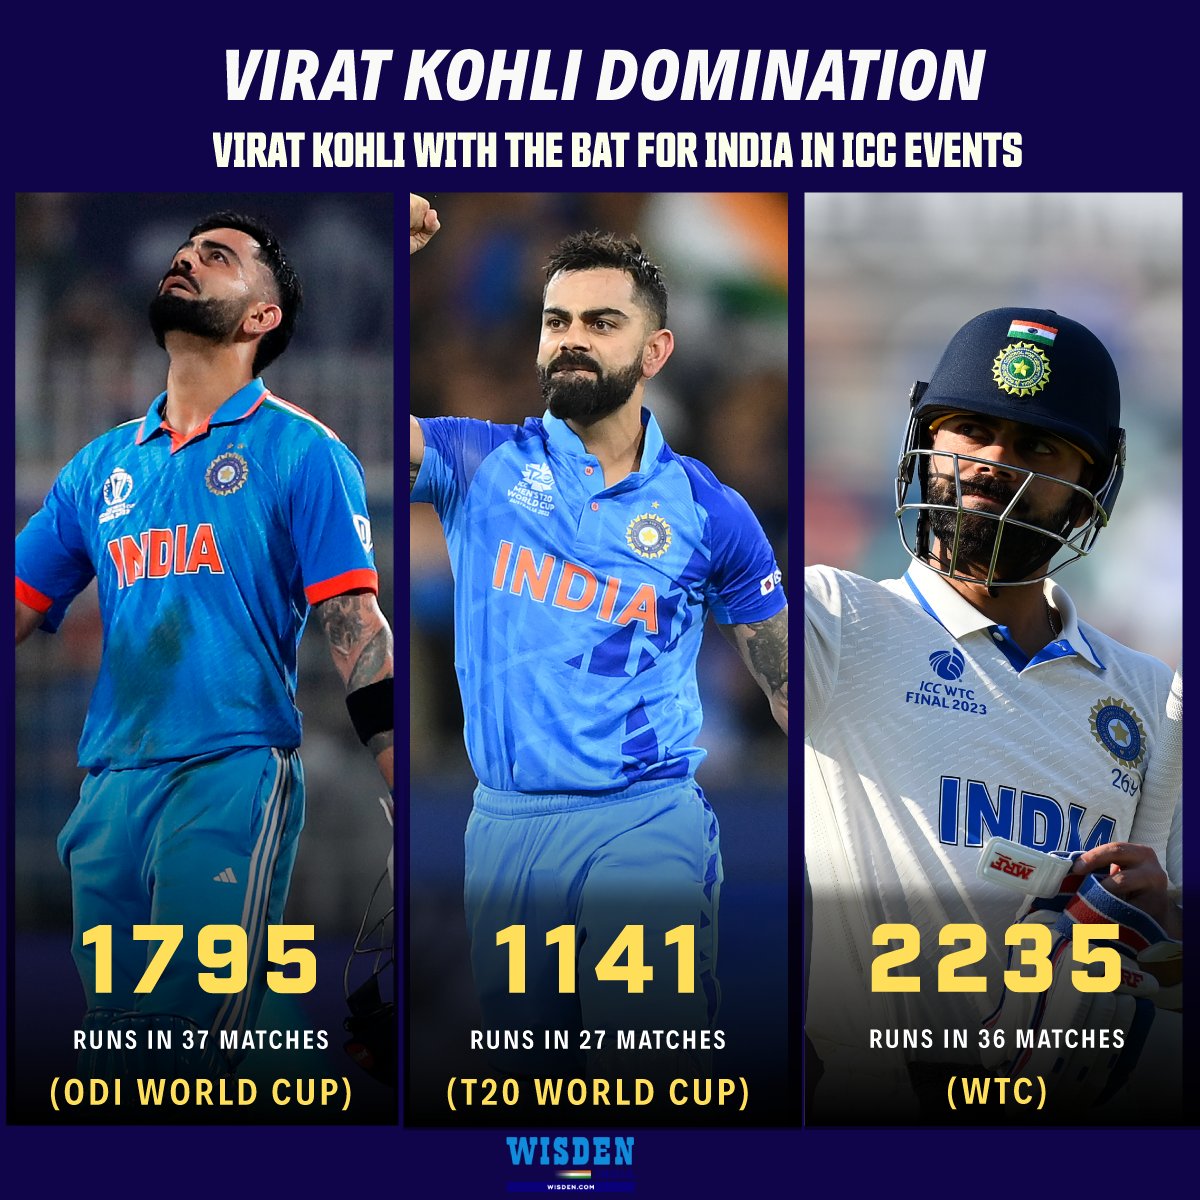 ODI WC: 1795 runs @ 59.8, SR - 88.2 T20 WC: 1141 runs @ 81.5, SR - 131.3 WTC: 2235 runs @ 39.2 Virat Kohli 🤝 Consistency across formats #ViratKohli #India #WorldCup #Cricket #Tests #ODIs #T20Is